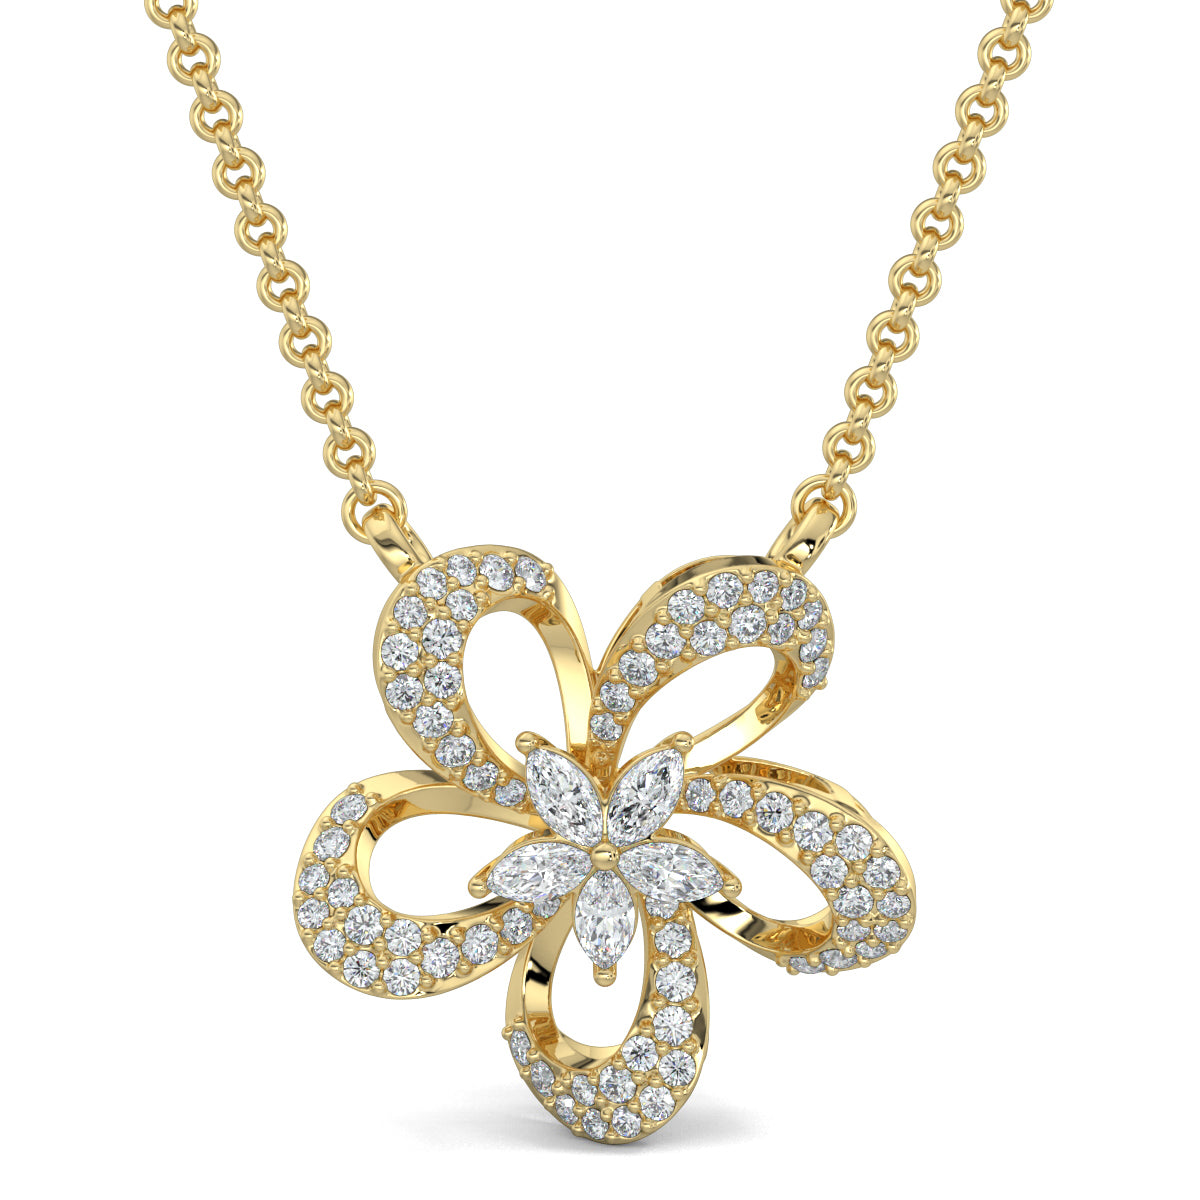 Yellow Gold, Diamond Pendant, Natural Diamonds, Lab-grown Diamonds, Petite Flora Diamond Pendant Set, Flower Pendant Set, Casual Jewelry, Diamond Pendant and Earrings Set